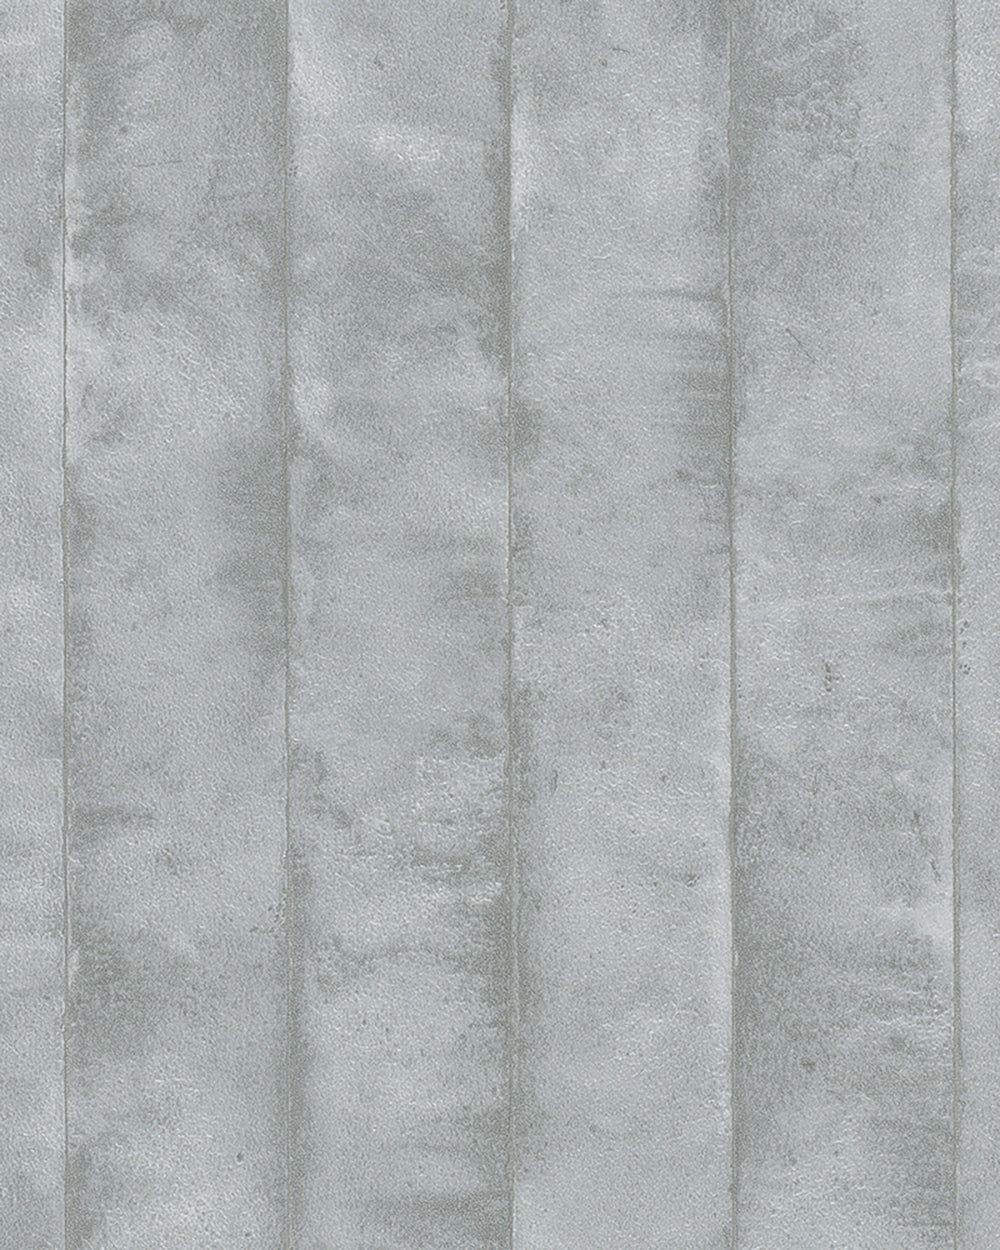 Avalon - Textured Concrete Panels industrial wallpaper Marburg Roll Grey  31616